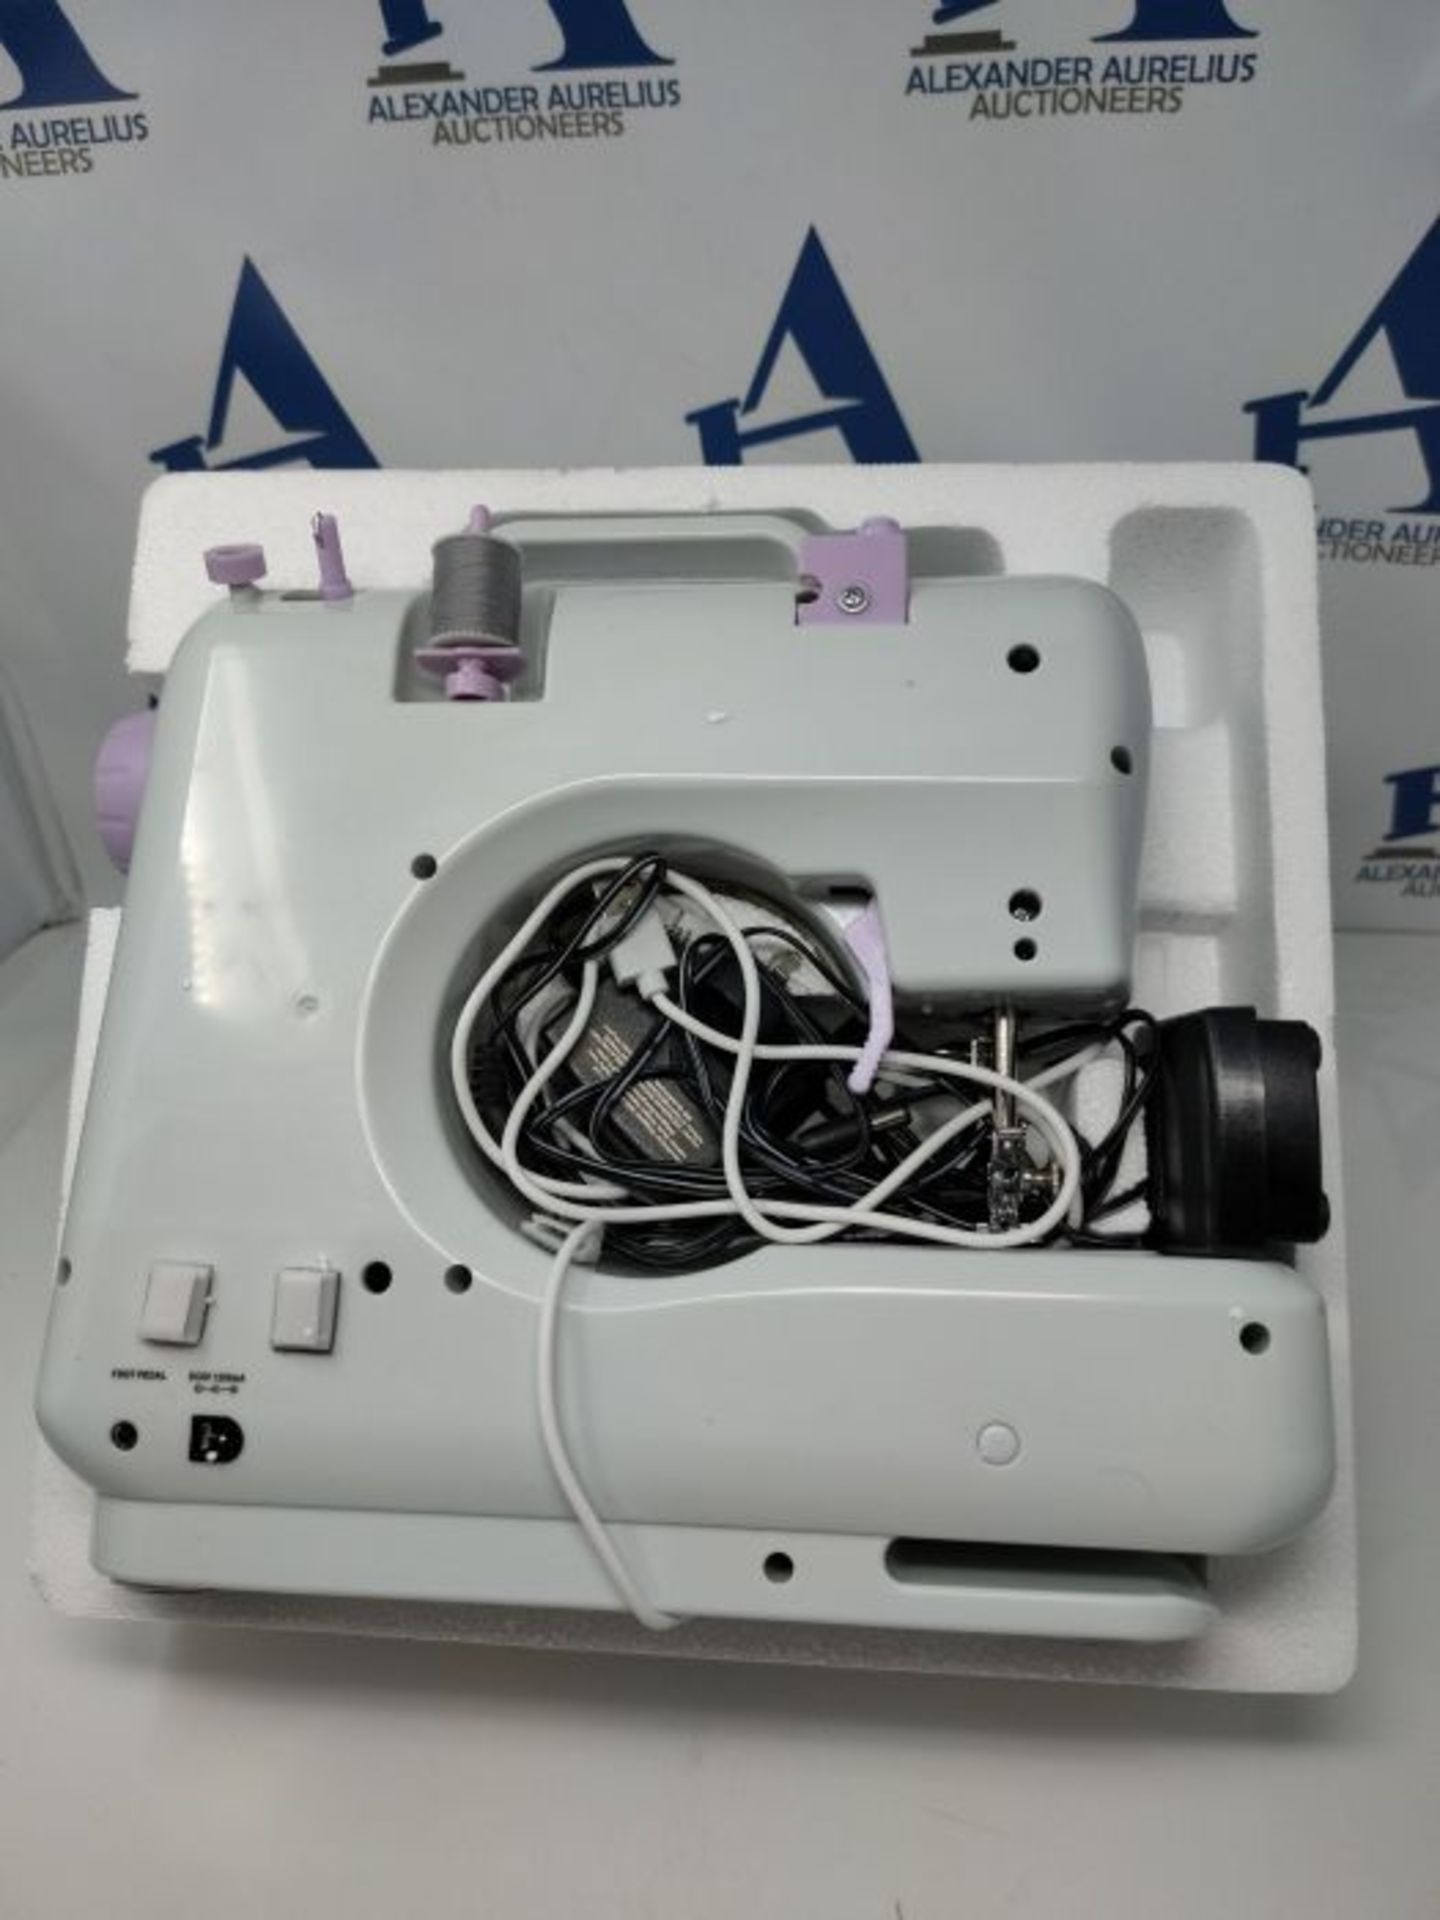 KPCB Tech 505 Sewing Machine with 12 Stitches Mini Size with Backstitch Buttonholing - Image 3 of 4